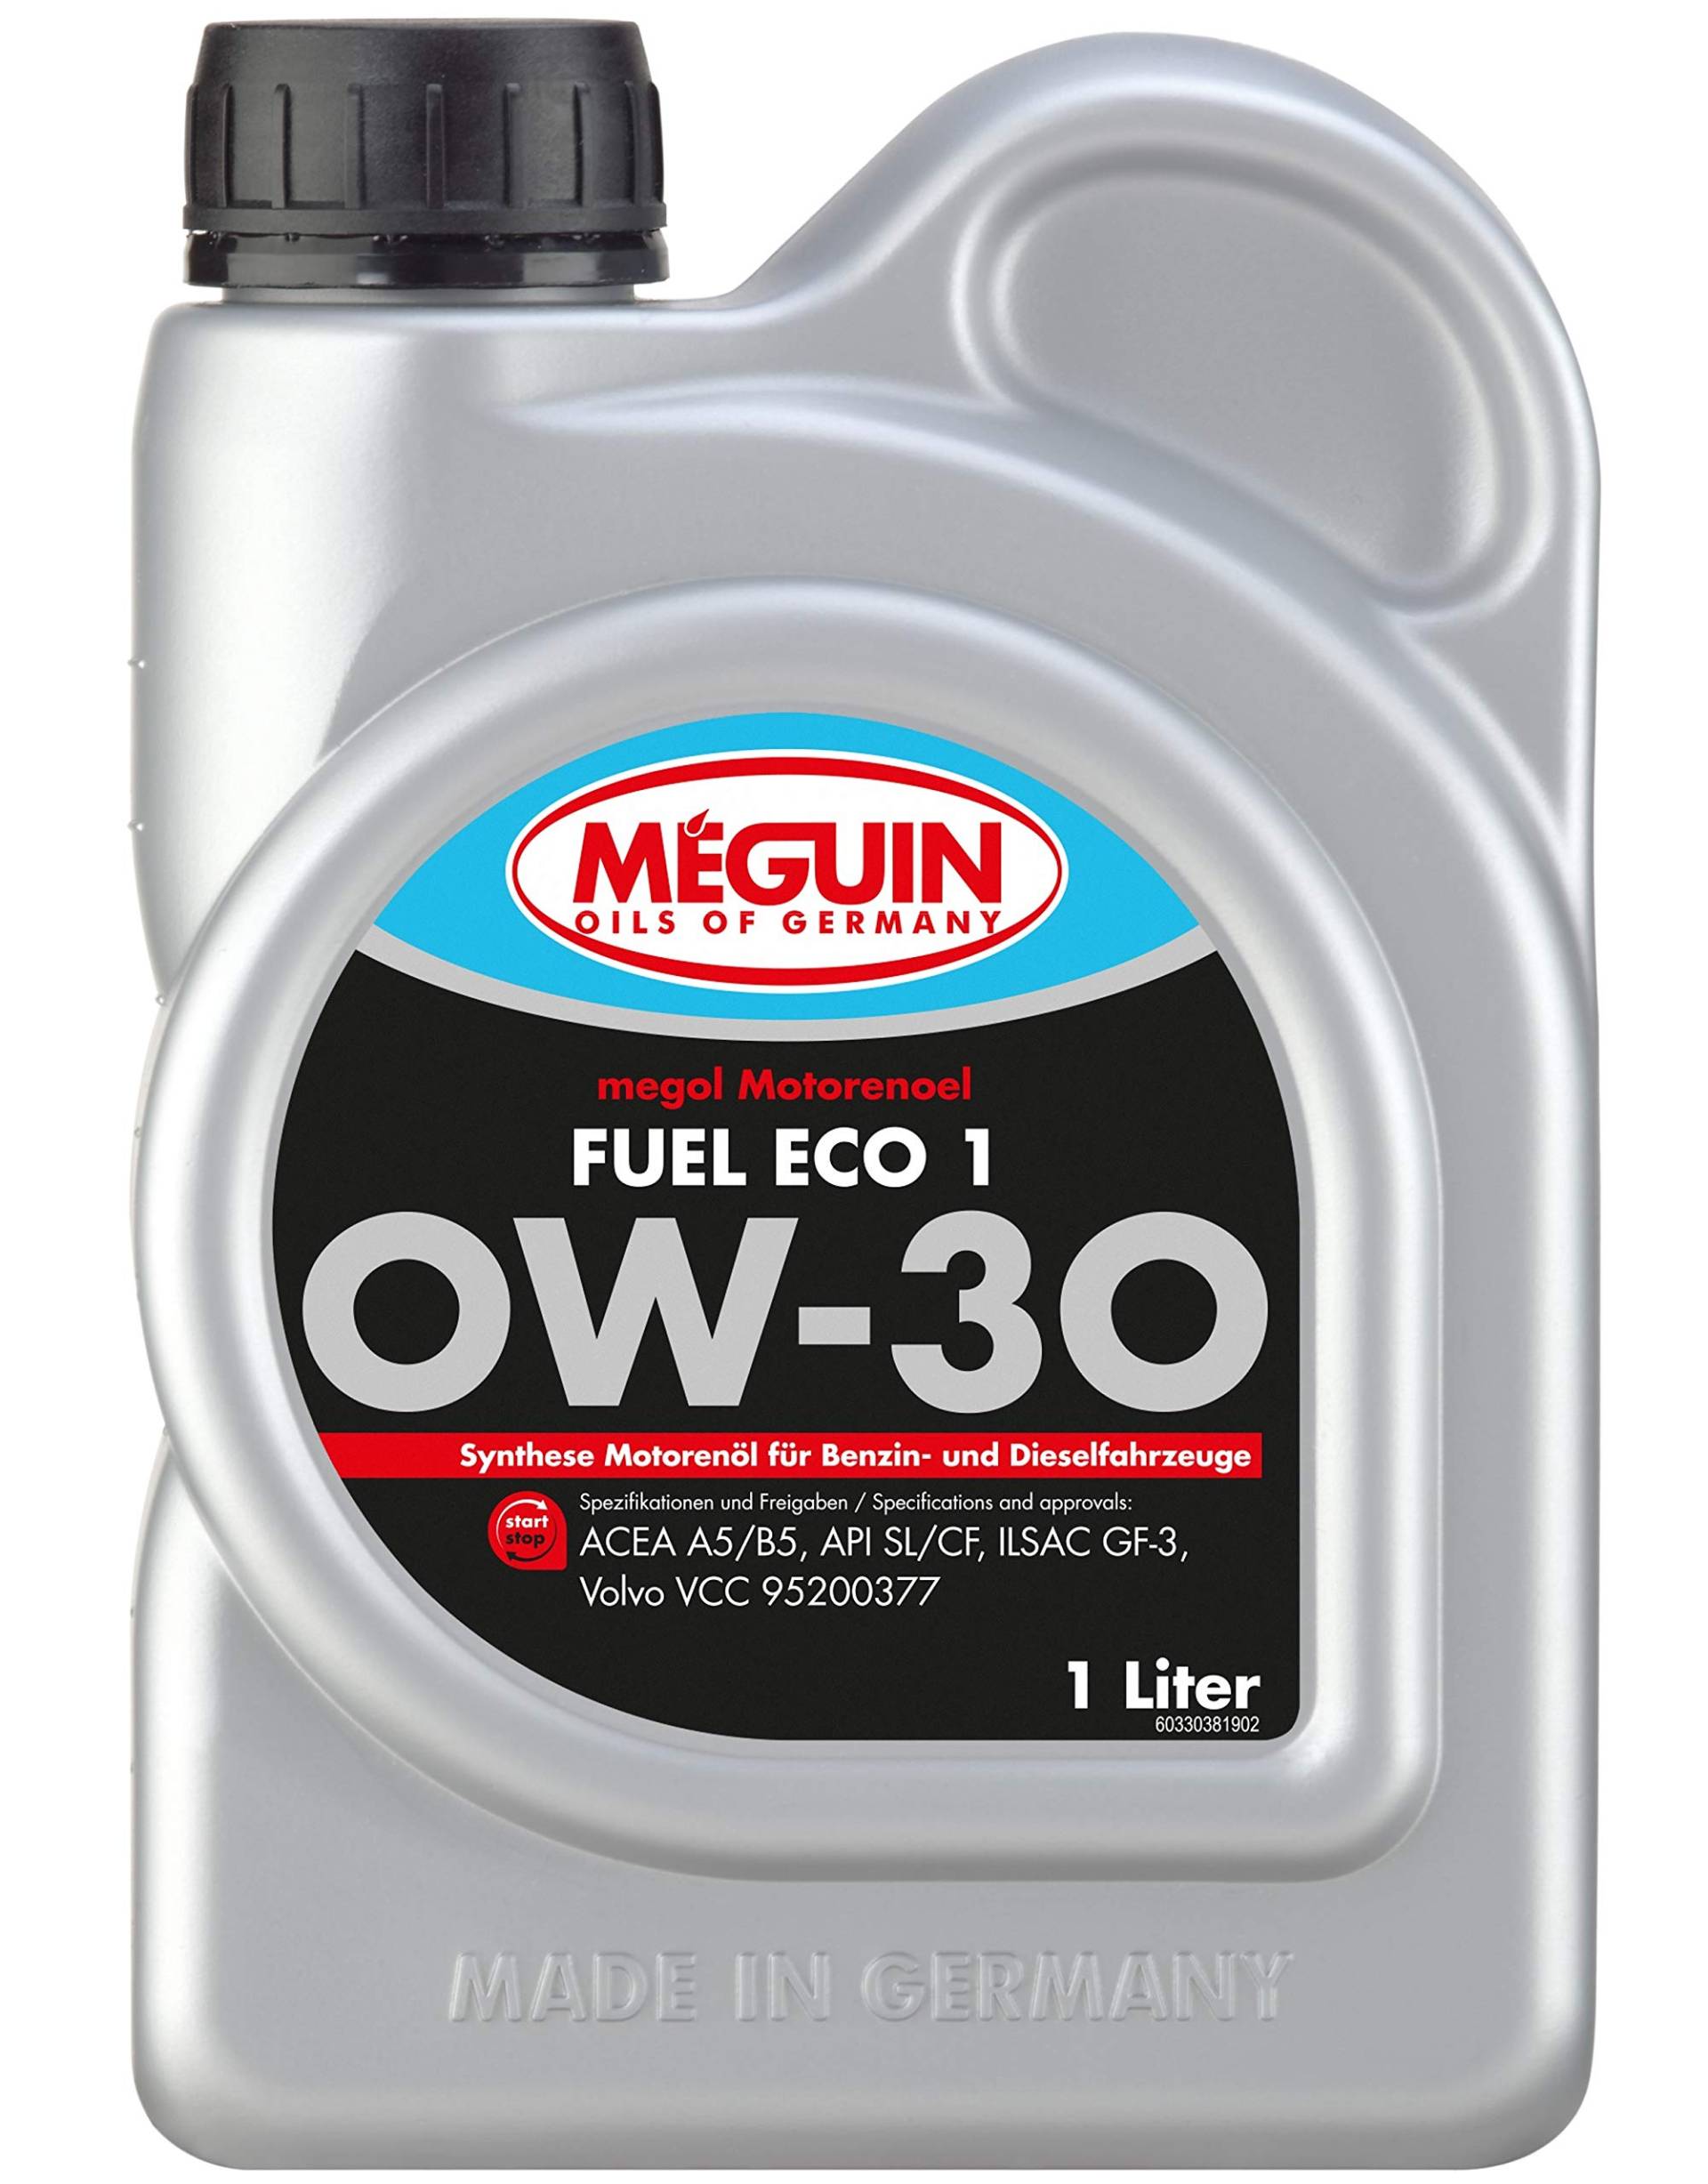 Meguin megol Fuel Eco 1 SAE 0W-30 Motoröl 1 Liter von MEGUIN